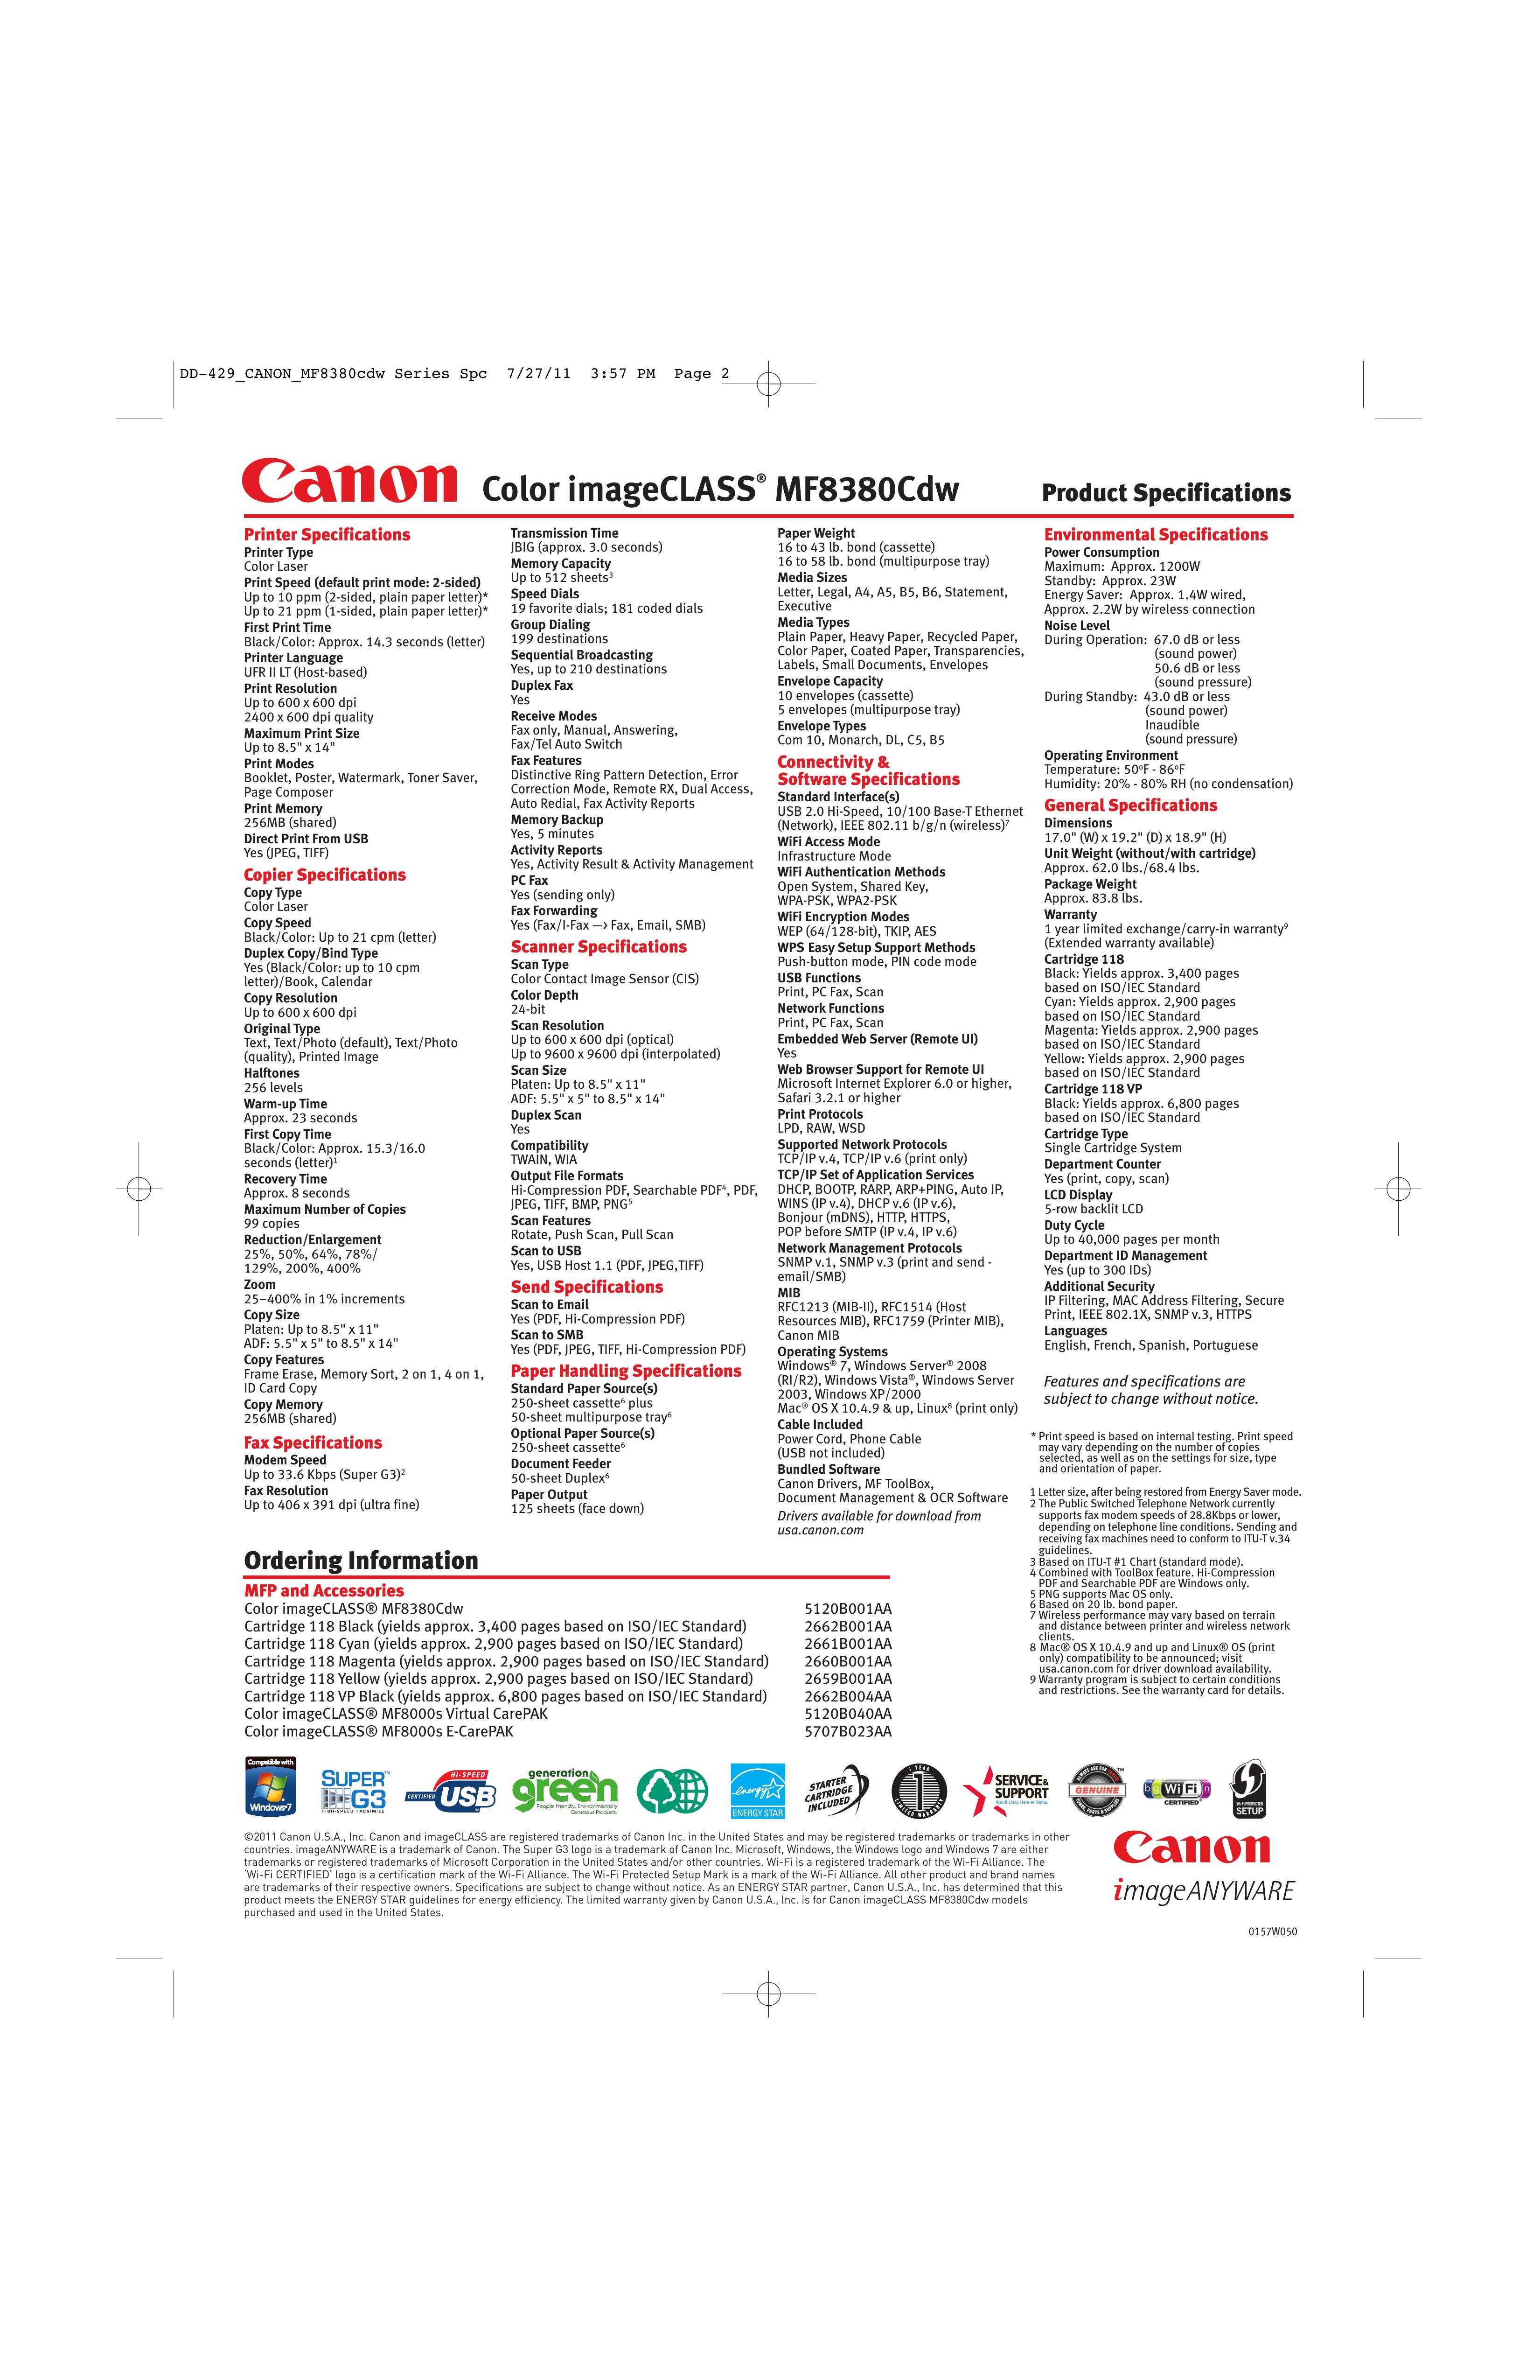 Canon 0157W050 Camcorder User Manual